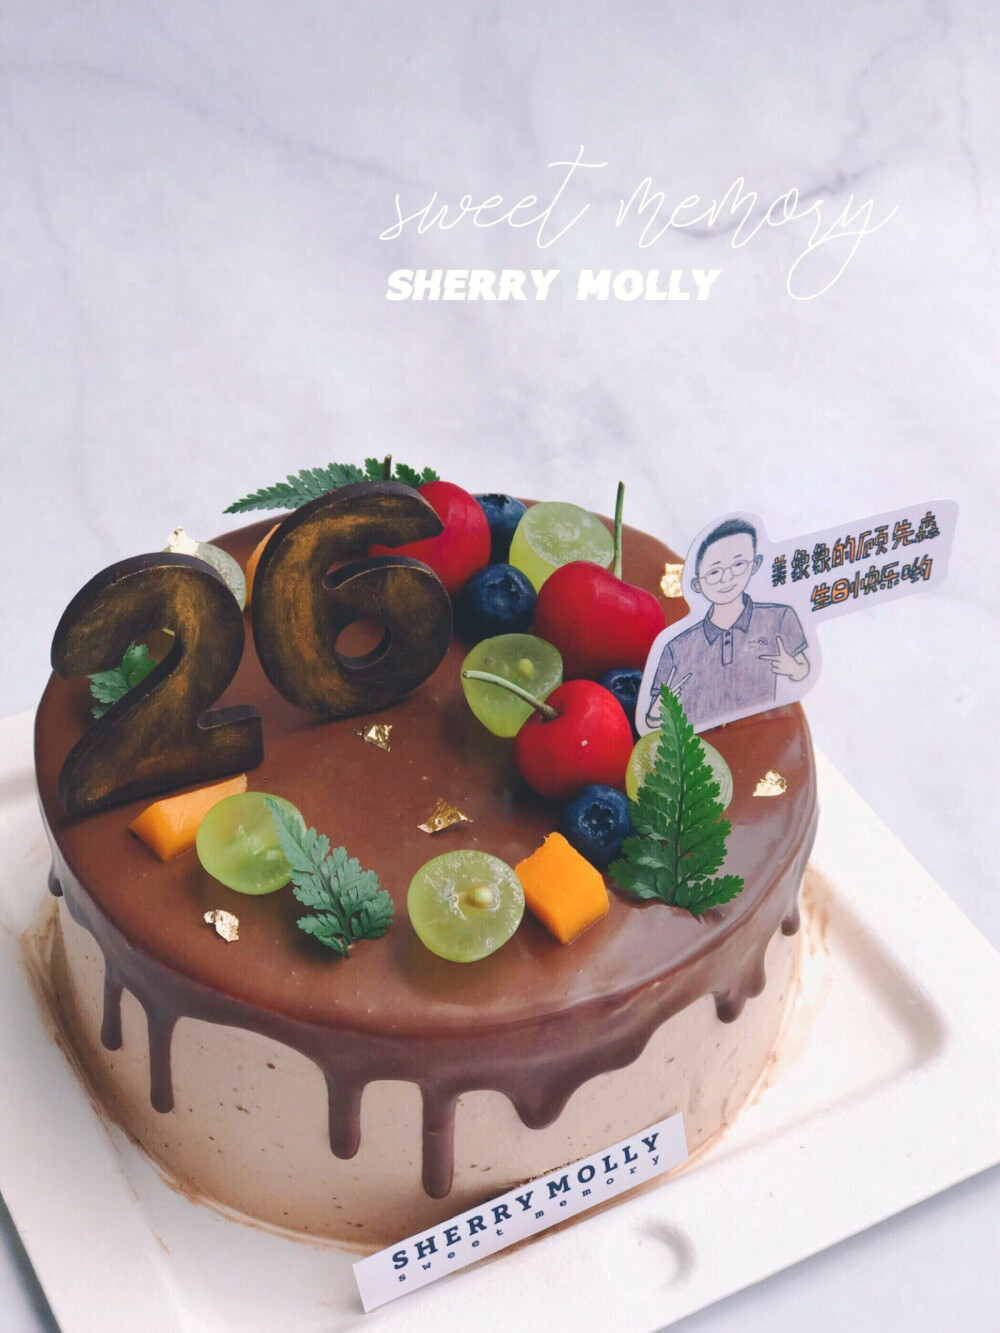 #SHERRY Molly家の下午茶#—『巧克力cake』一个特别直爽效率超高的女生订给男生的生日cake～ 喜欢这款浓郁风格的样子 还蛮适合这个戴金丝眼镜男生的呢